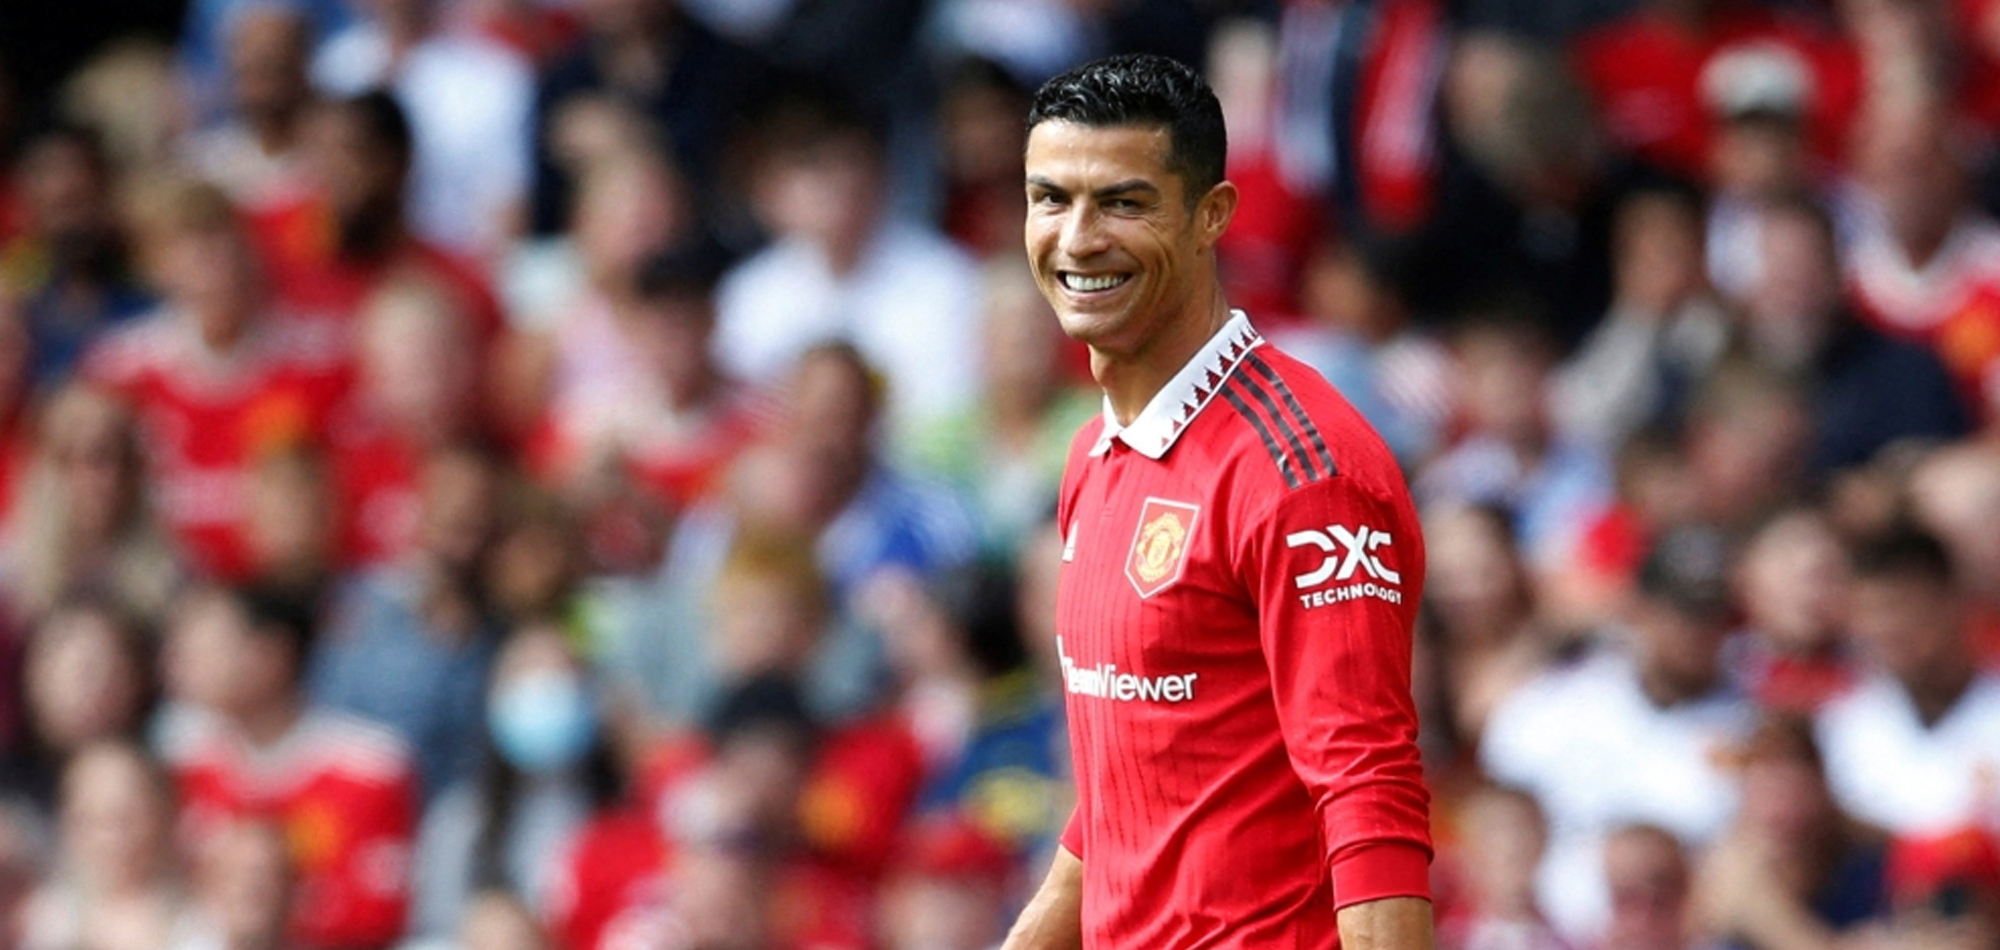 Ten Hag tells Ronaldo to improve match fitness after missing pre-season